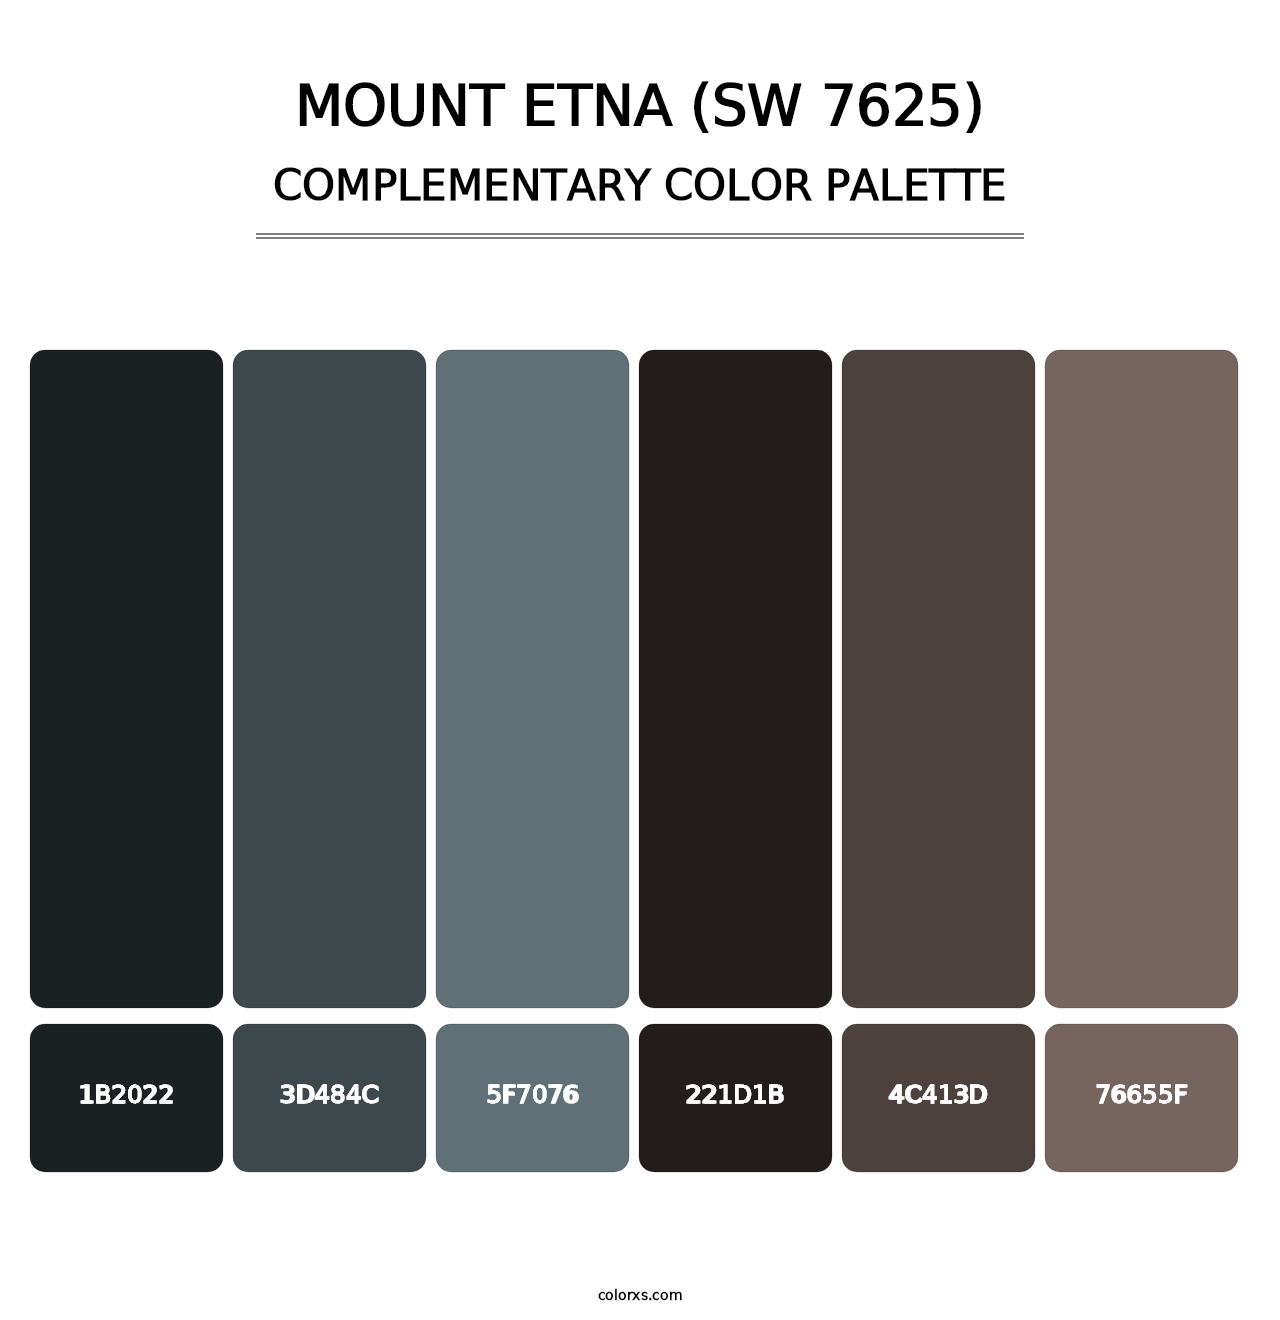 Mount Etna (SW 7625) - Complementary Color Palette